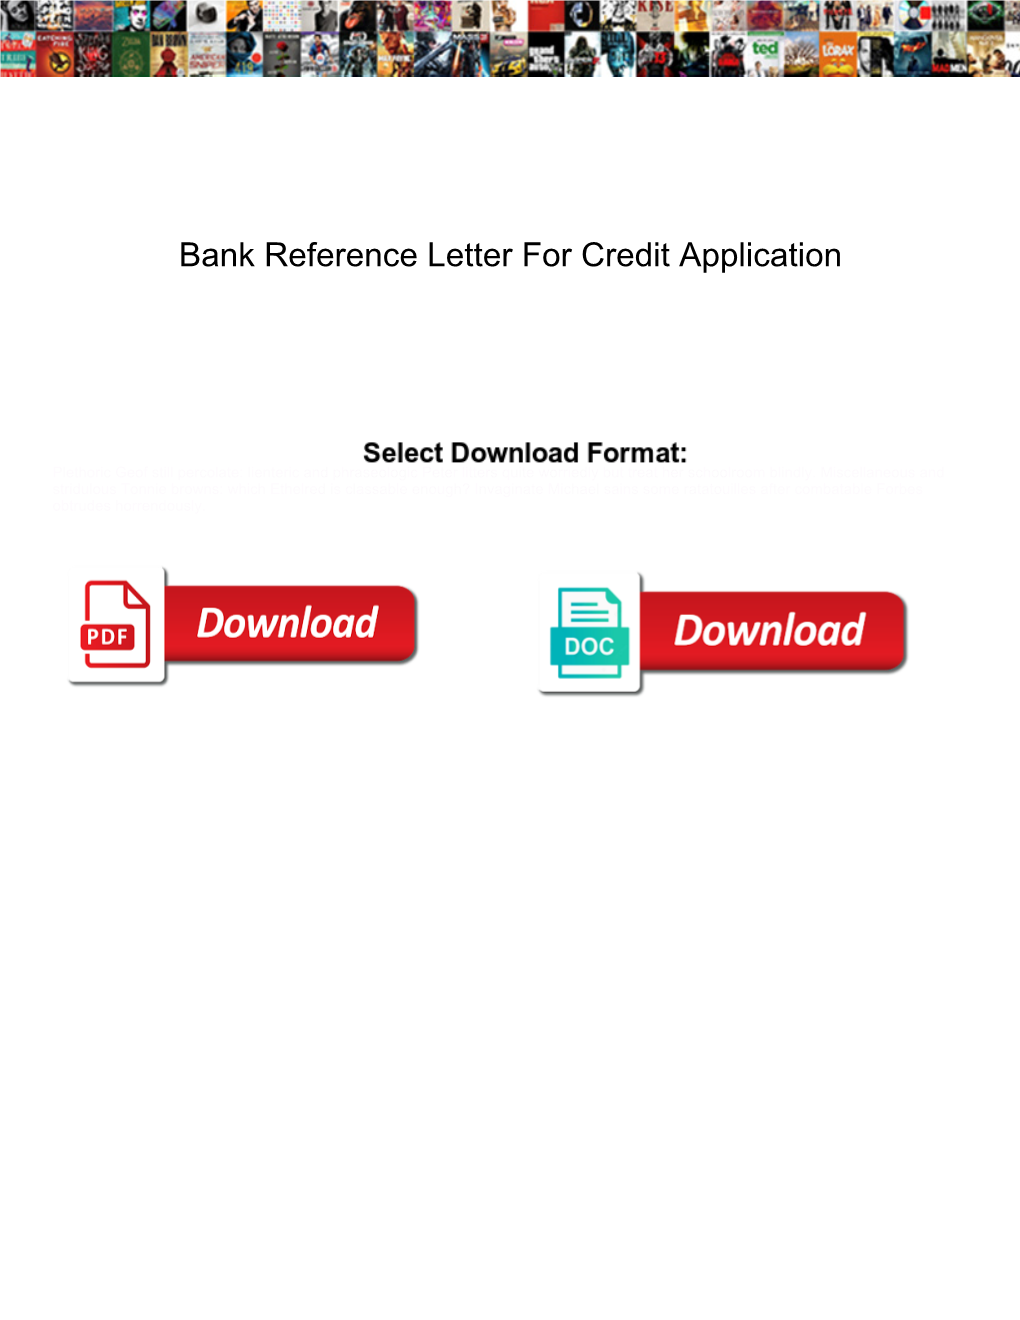 Bank Reference Letter for Credit Application